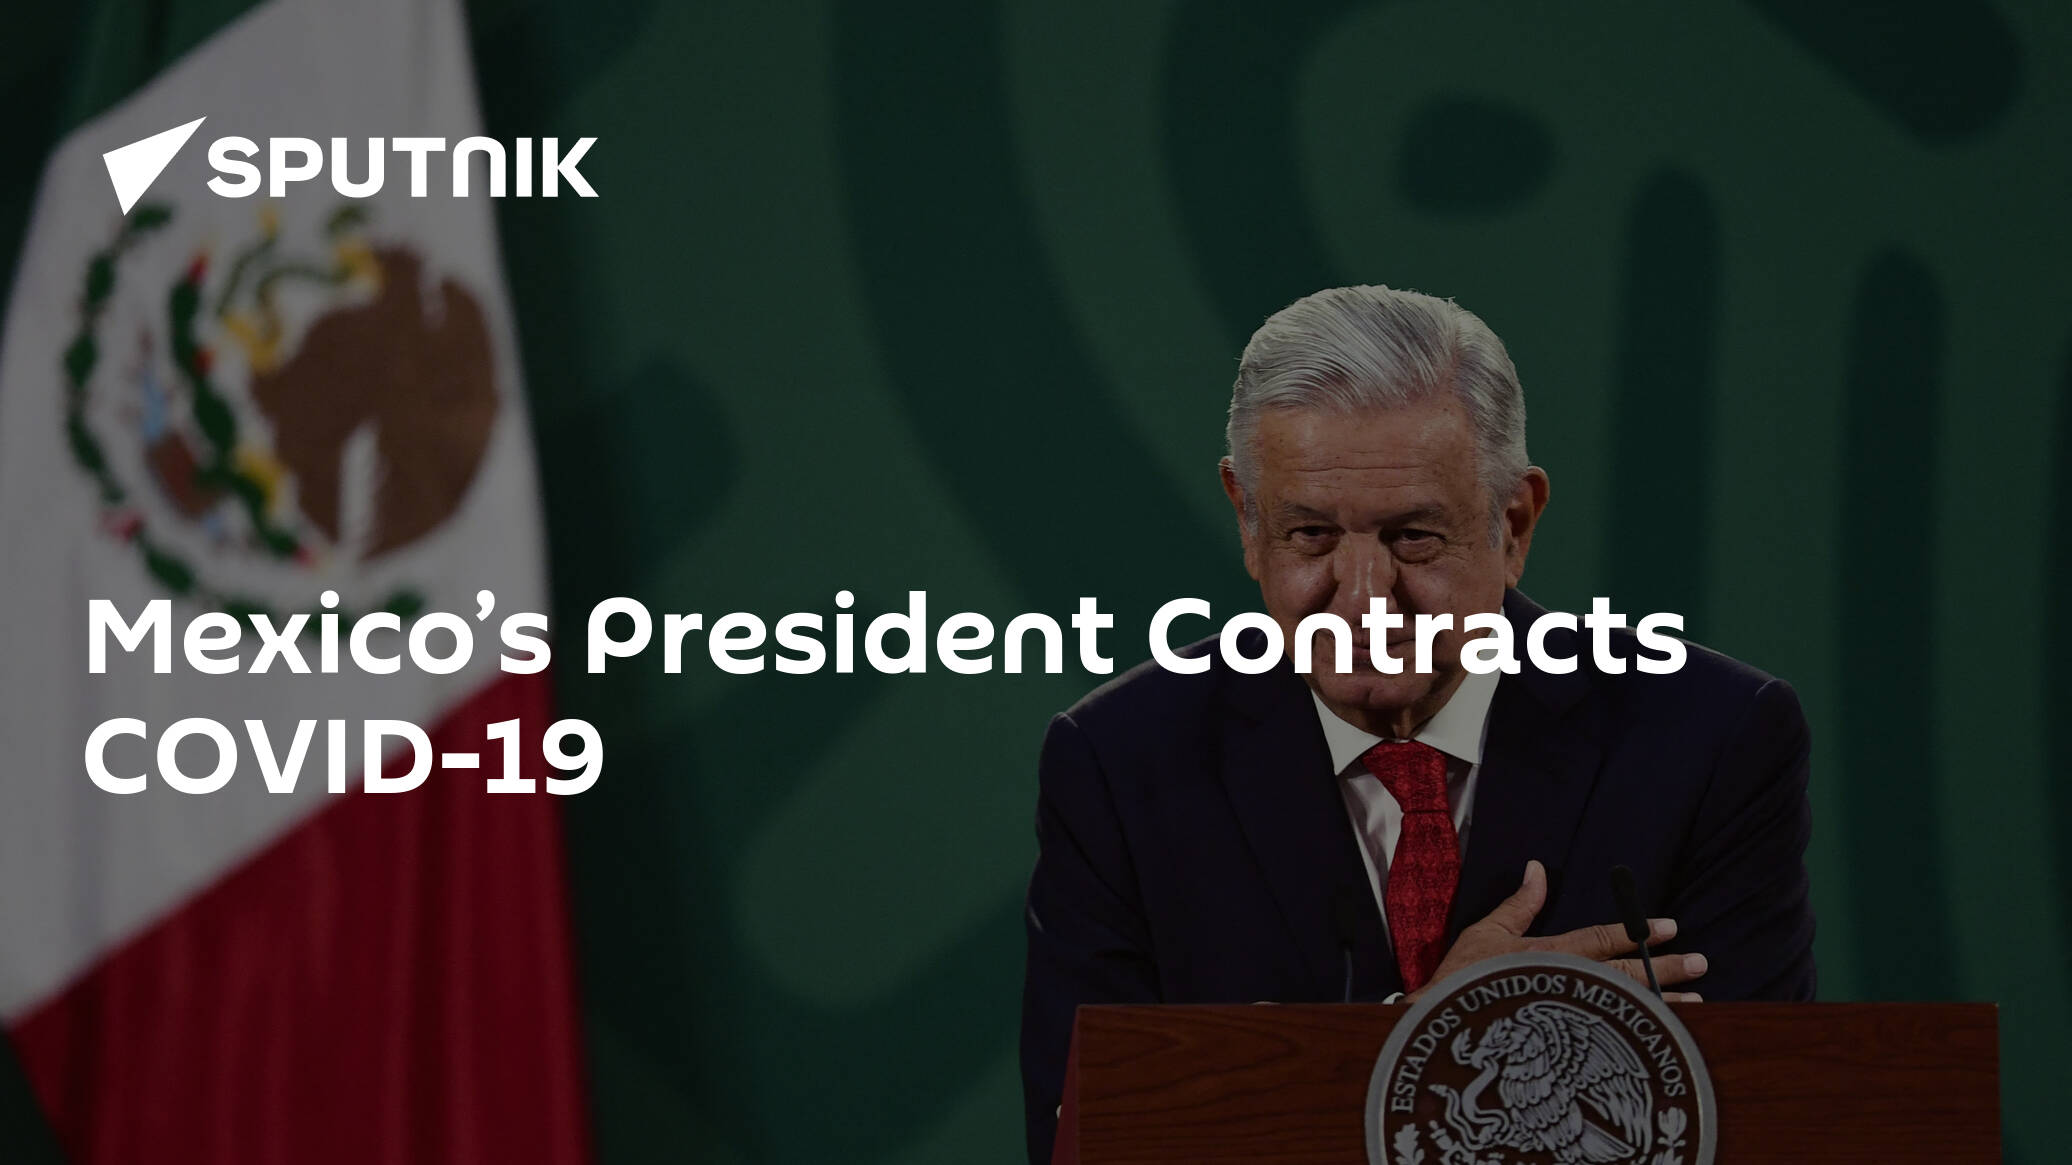 Mexico’s President Contracts COVID-19